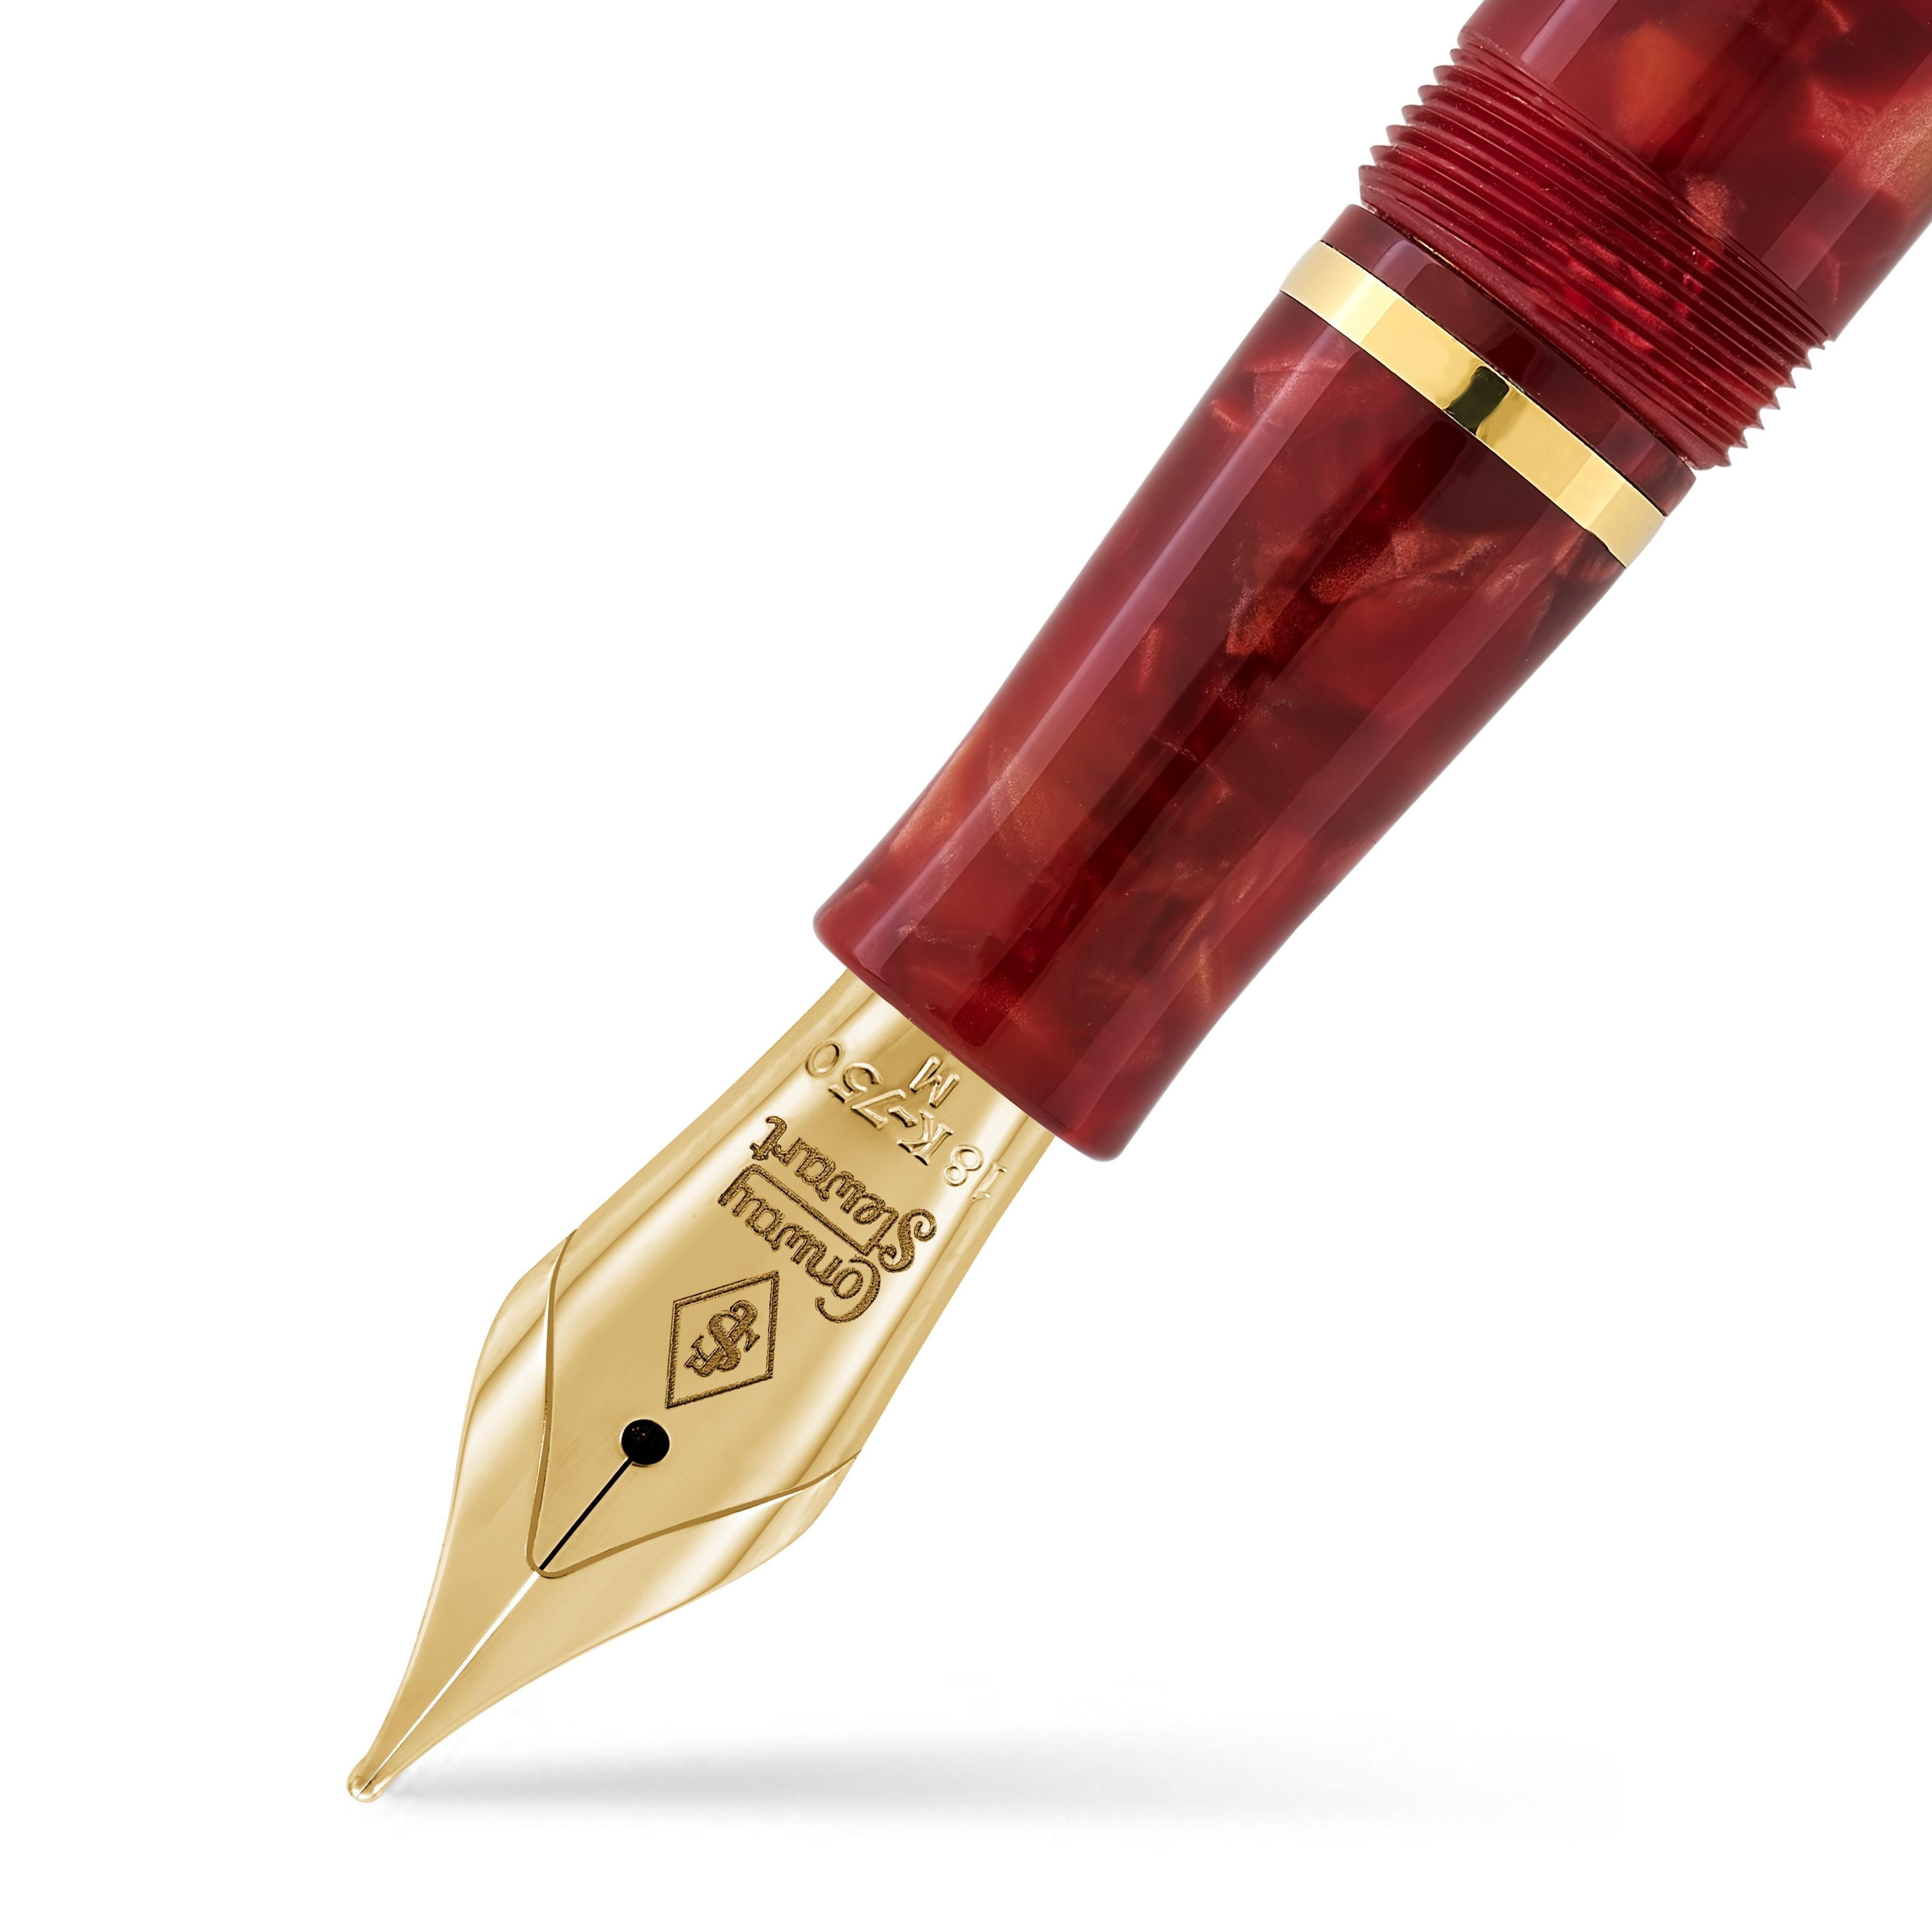 Beau stylo plume, stylo, ghtweight Brown cadeau idéal portable